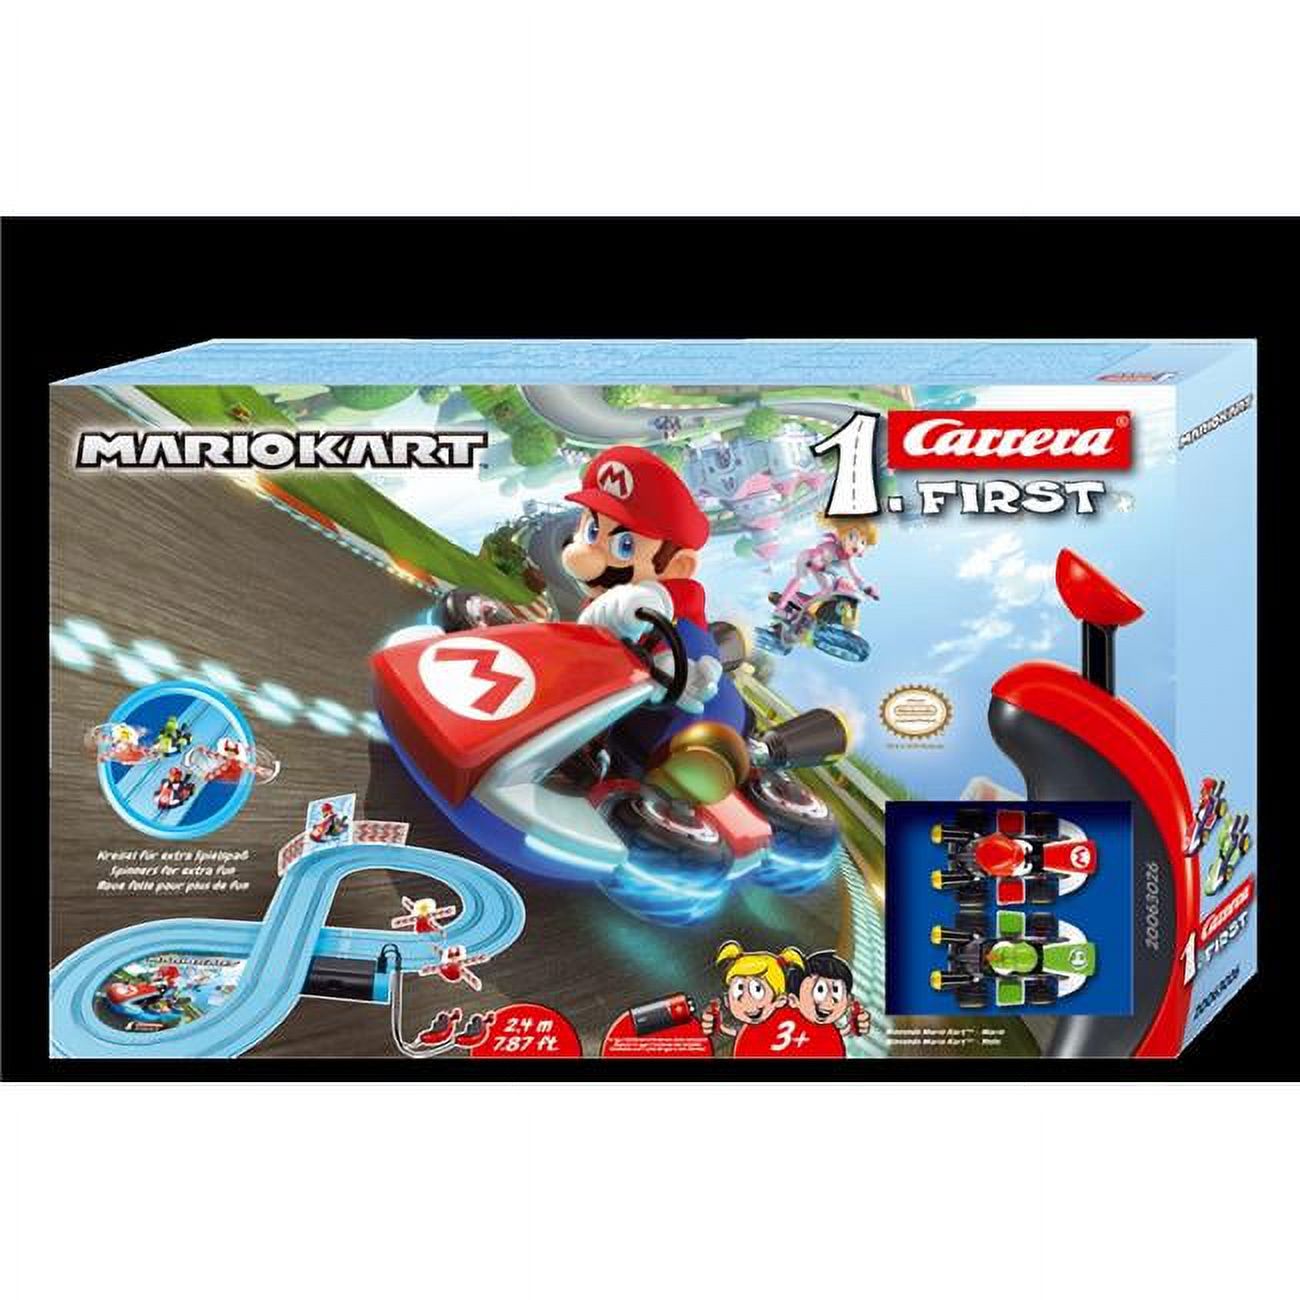 Carrera First Mario Kart Beginner Slot Car Race Track Set Featuring Mario Versus Yoshi - image 1 of 7